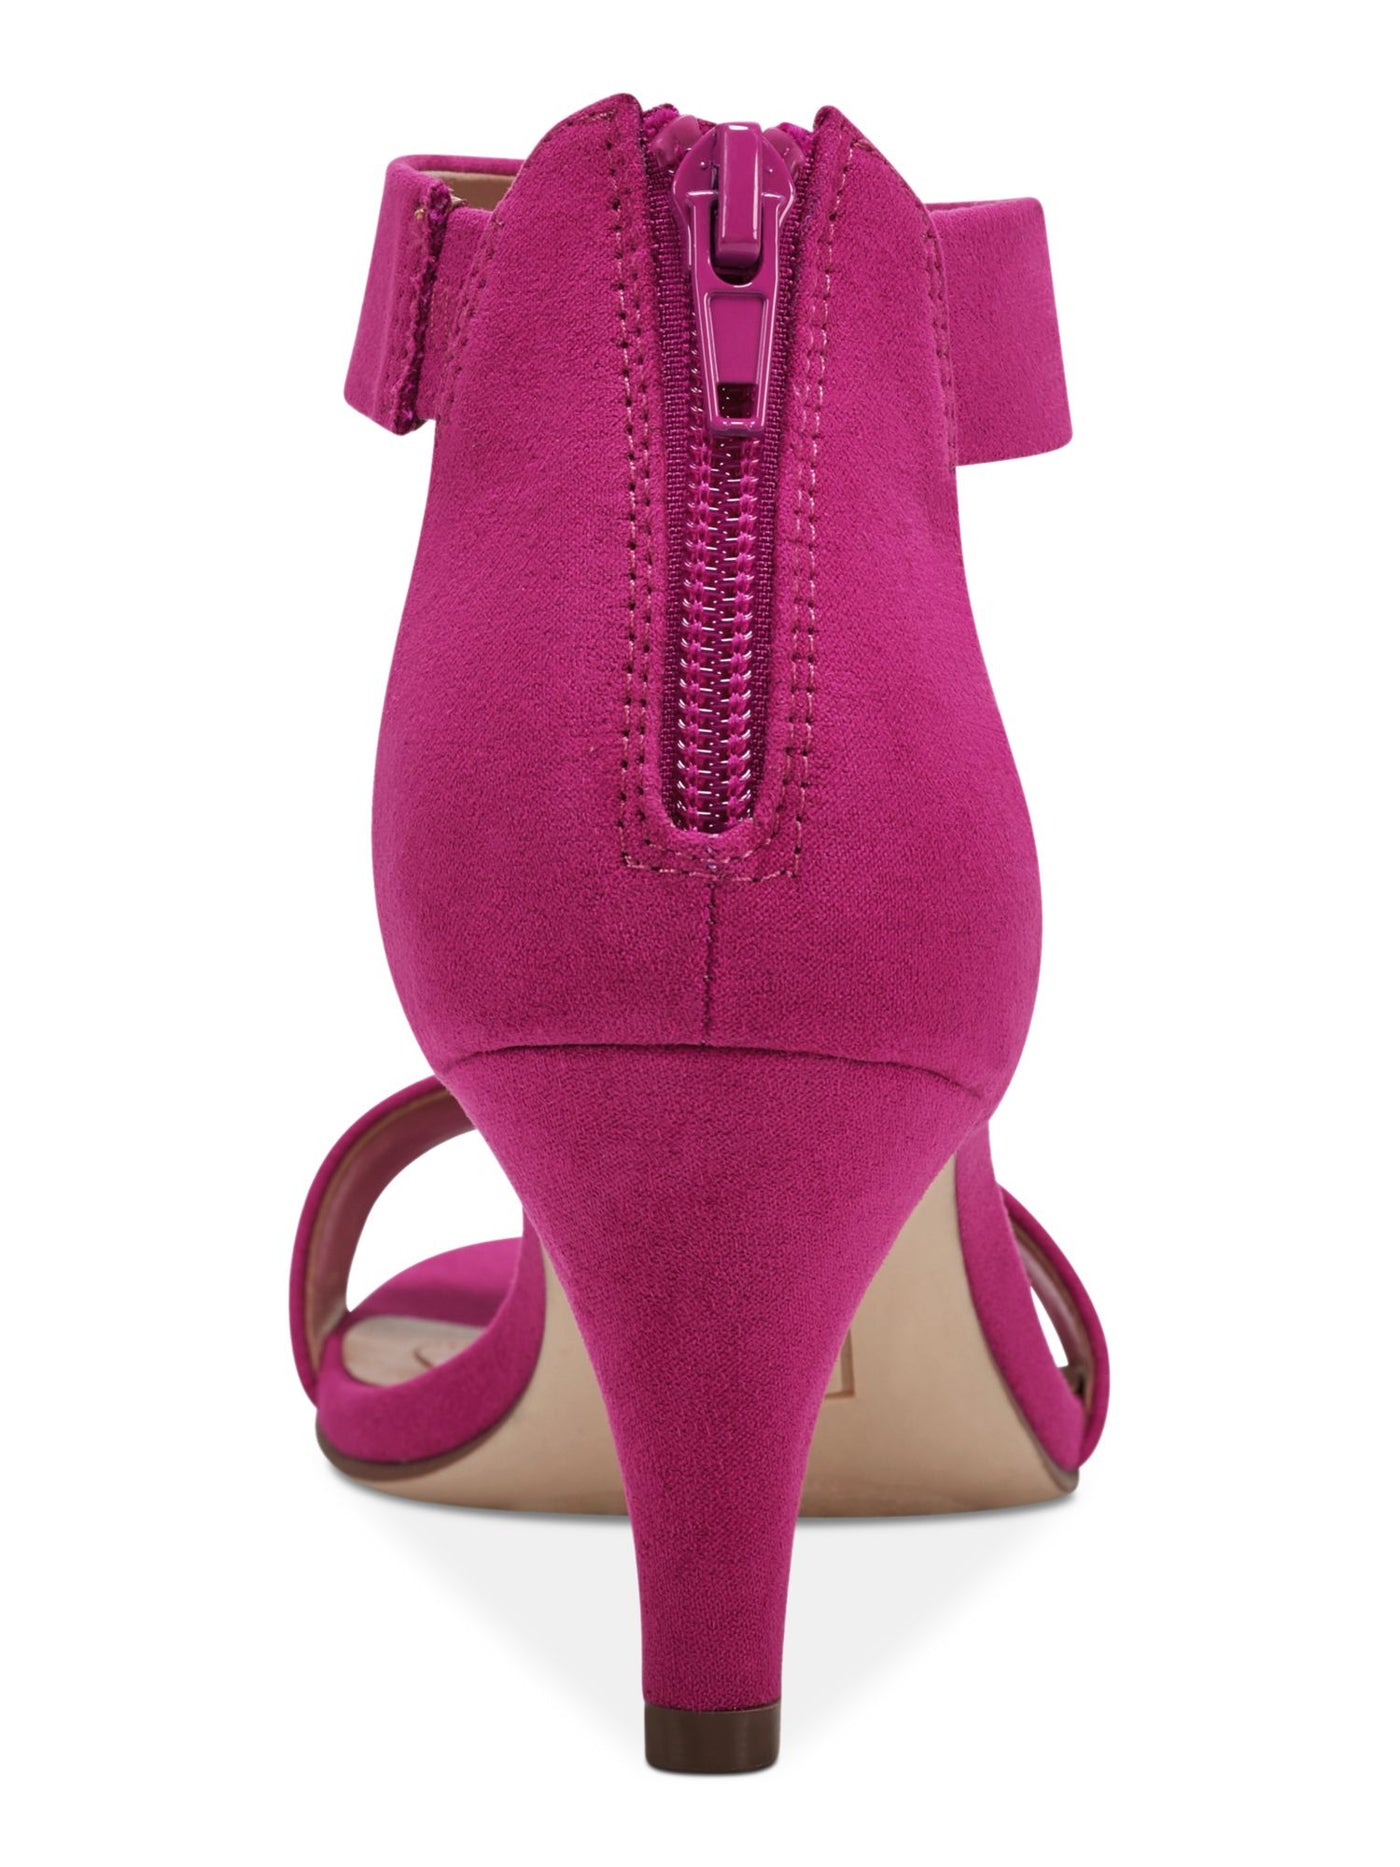 STYLE & COMPANY Womens Pink Padded Ankle Strap Goring Paycee Almond Toe Kitten Heel Zip-Up Dress Heeled Sandal 5 M